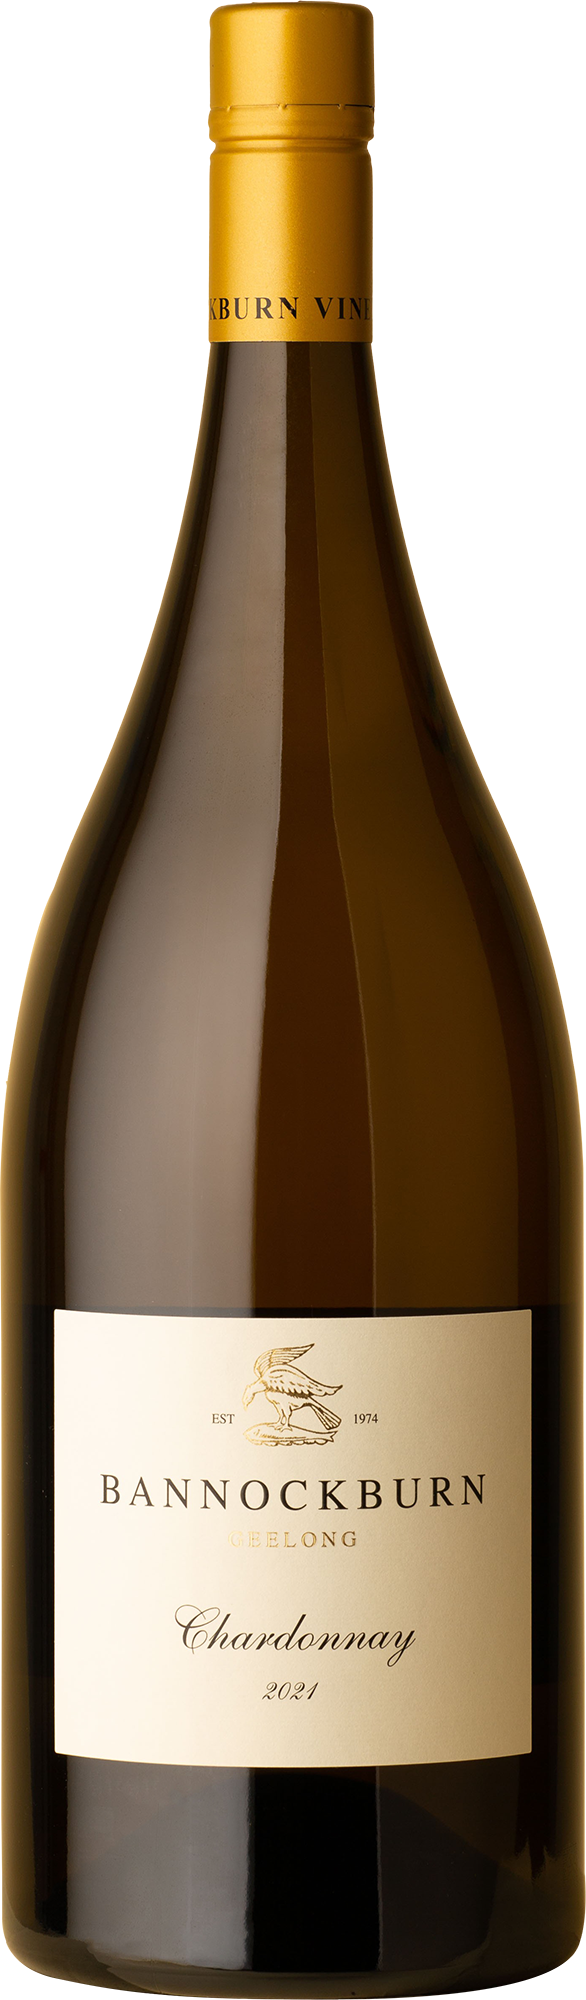 Bannockburn - Chardonnay MAGNUM 2021 White Wine